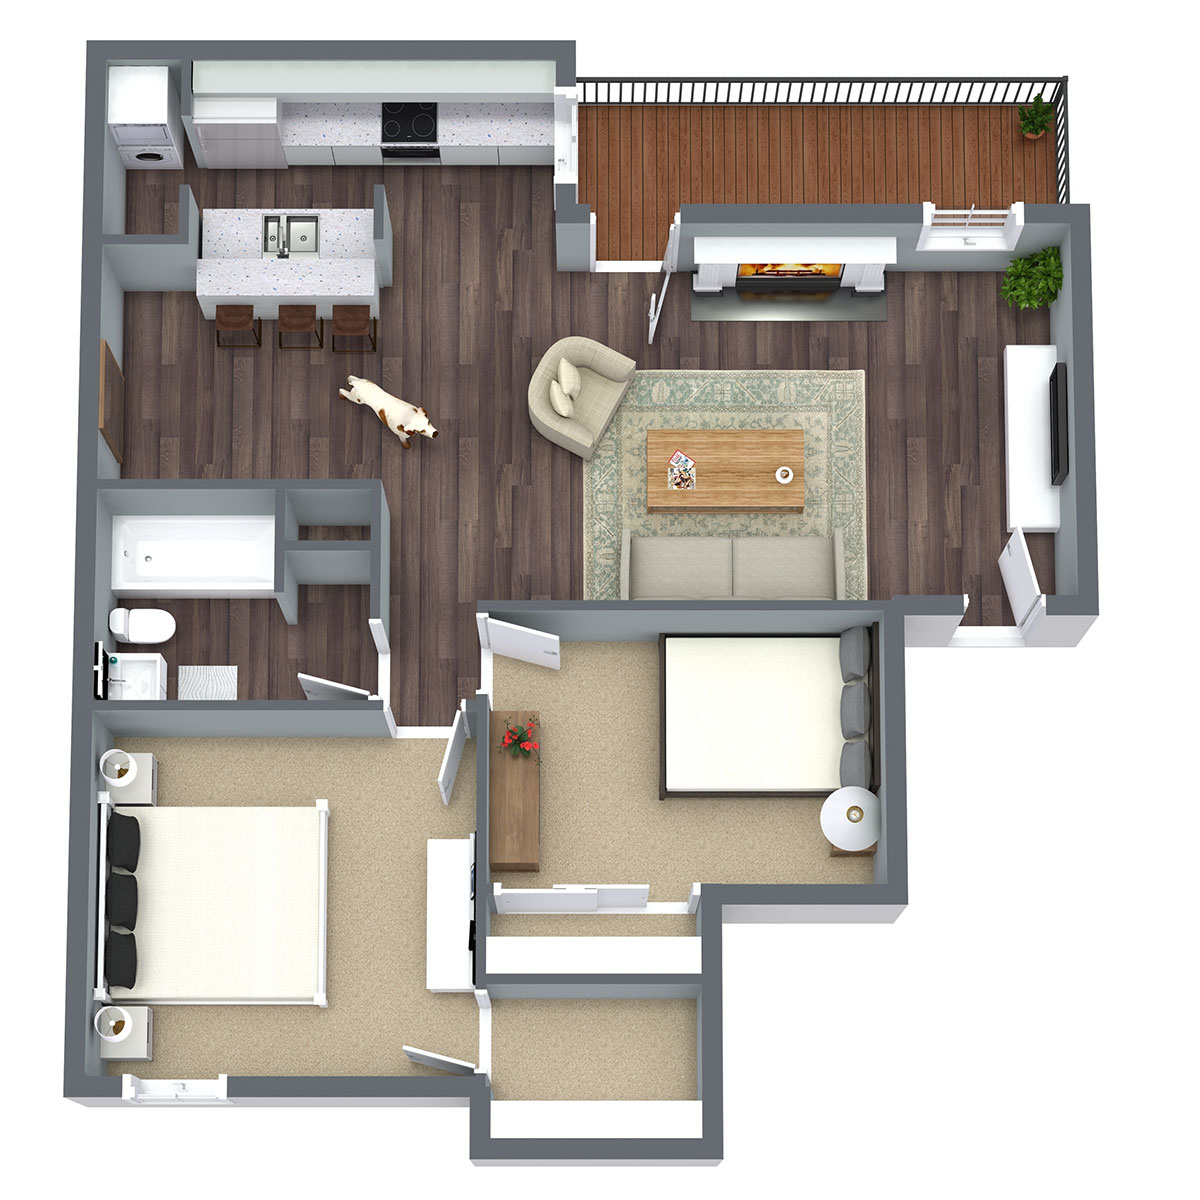 Rock Island Apartments Floorplan 6